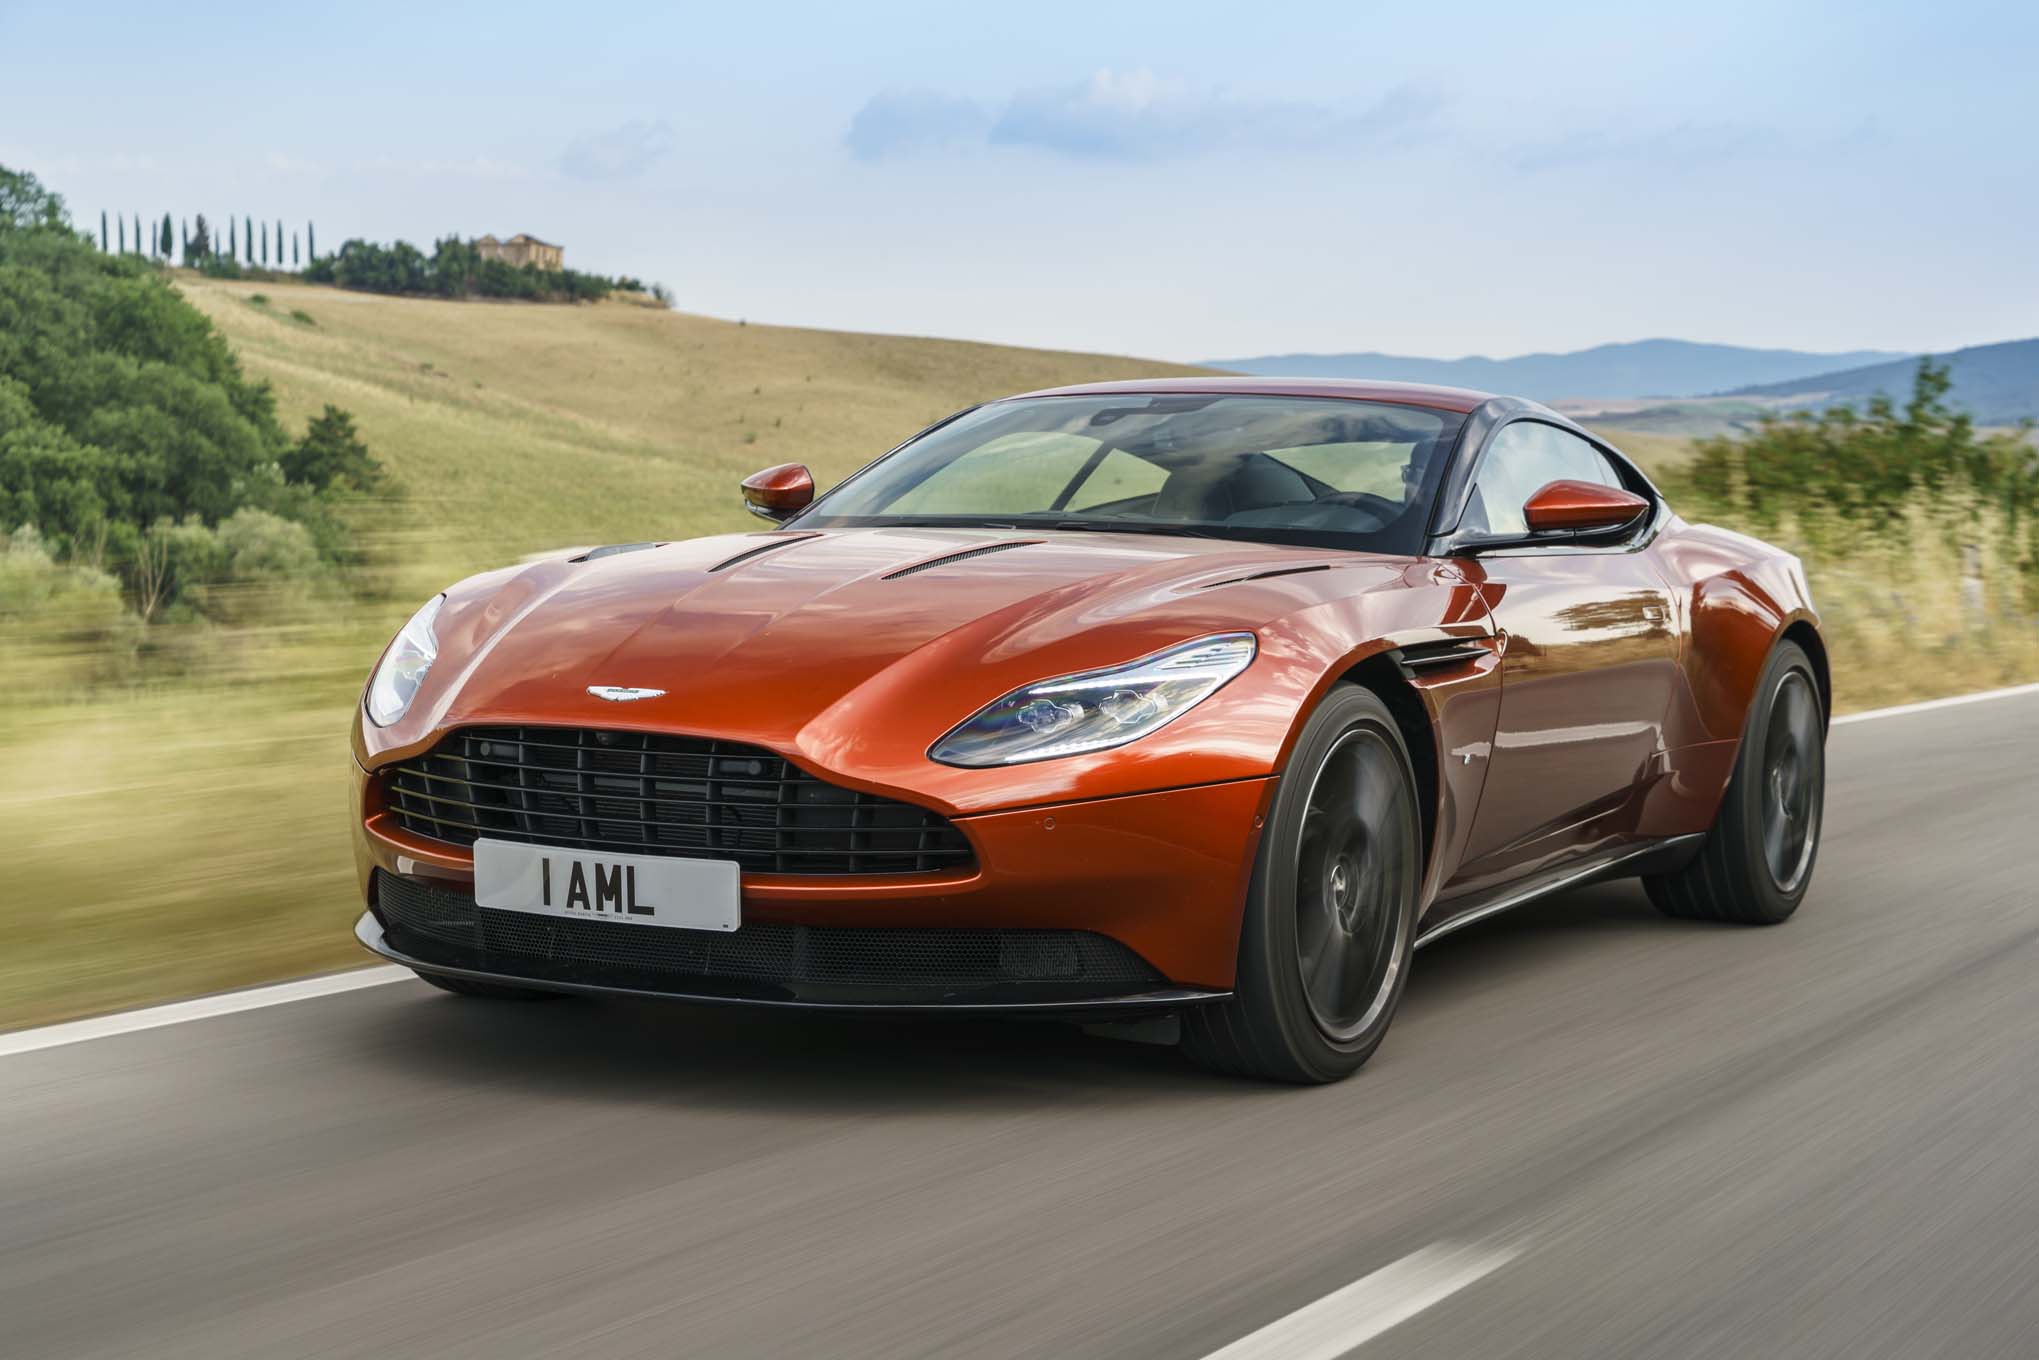 Aston Martin DB11 Backgrounds, Compatible - PC, Mobile, Gadgets| 2039x1360 px